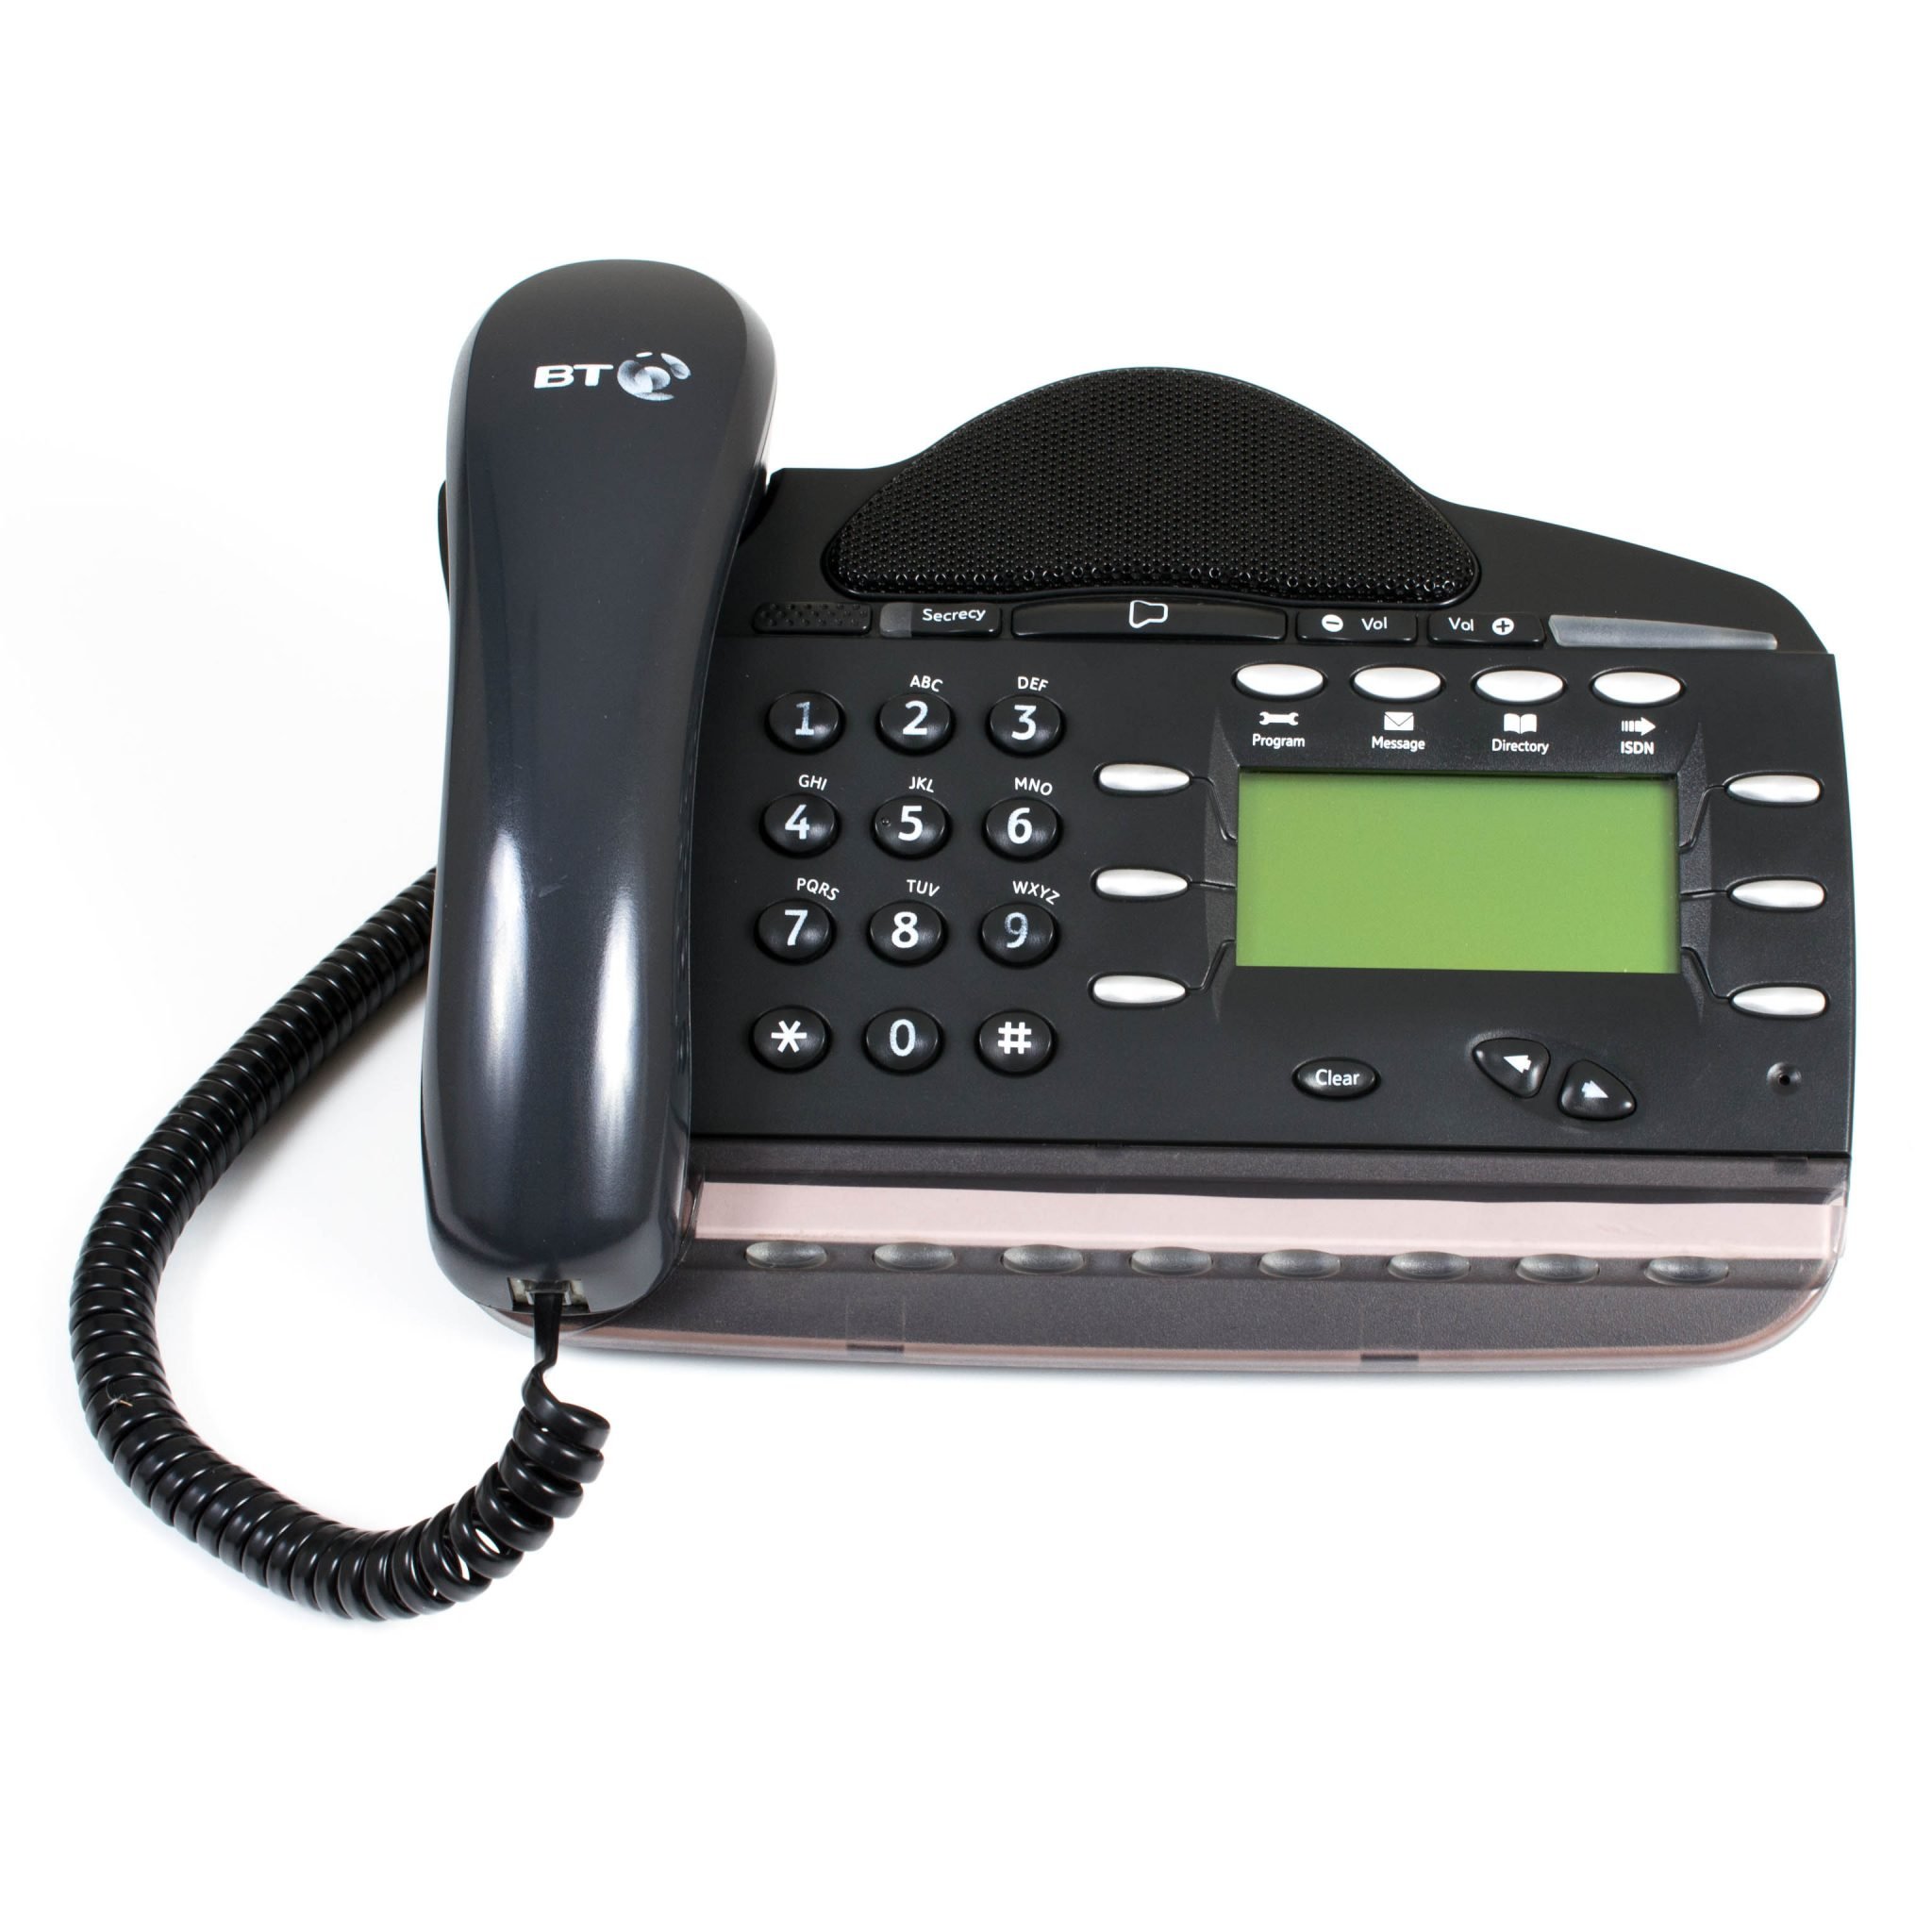 V8 телефон. Телефон 8d. Cobra telephone answering System. Телефон BT relate 700 CD.